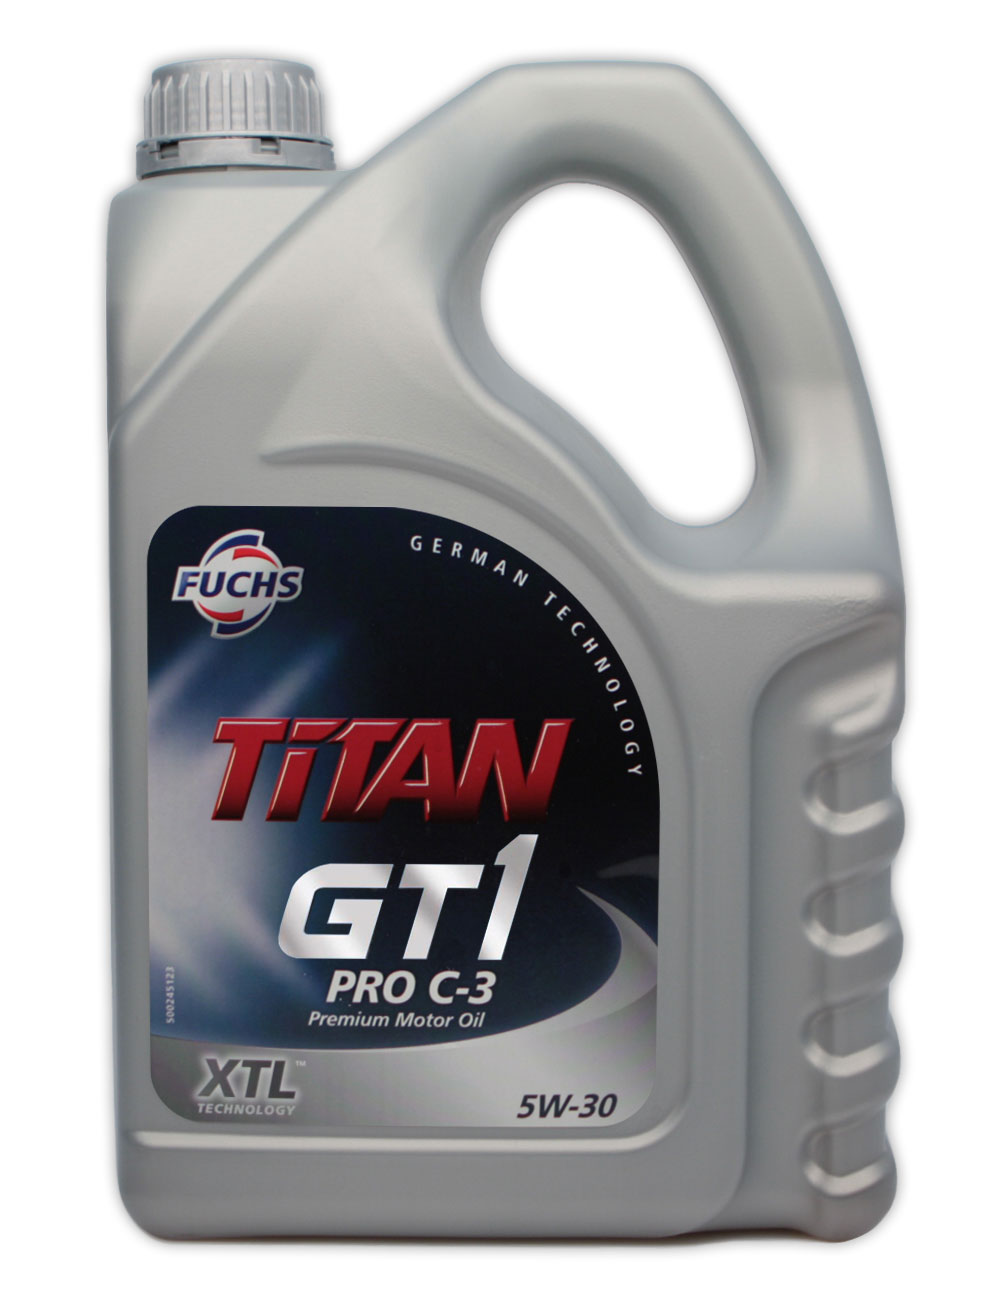 Titan gt1 pro c-3 5w-30 4л масло моторное синтет. - FUCHS 600756239